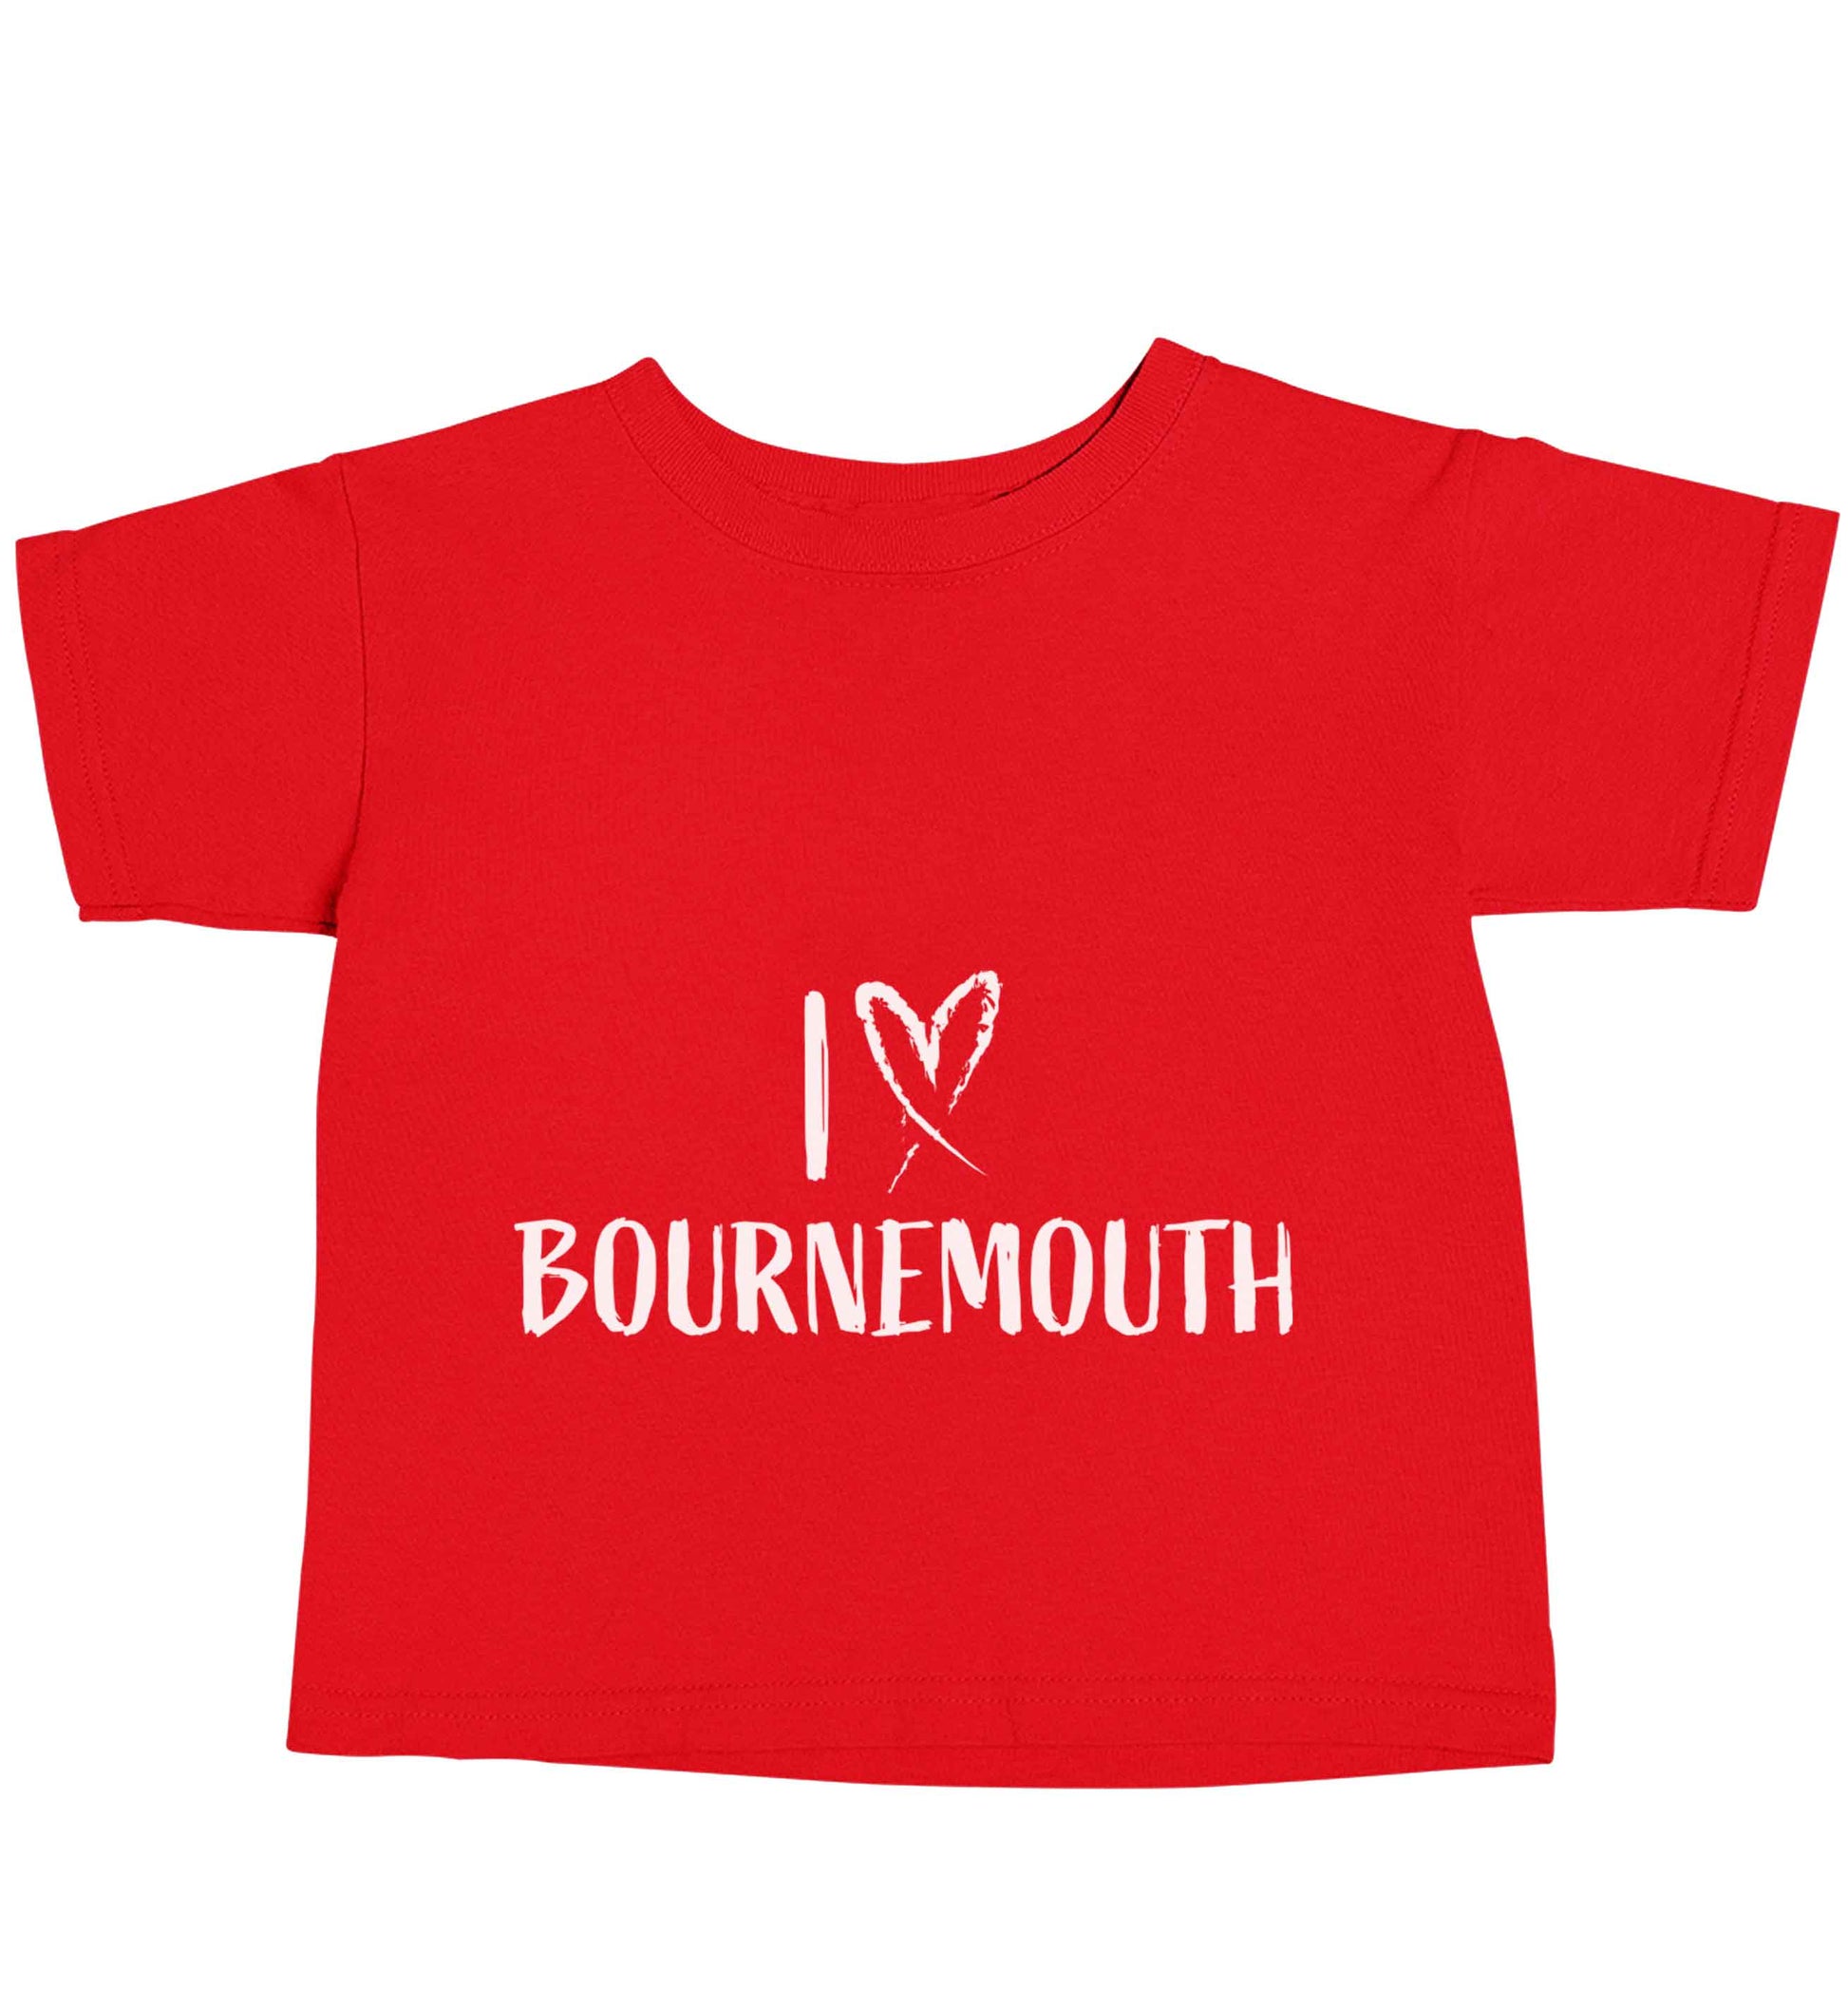 I love Bournemouth red baby toddler Tshirt 2 Years